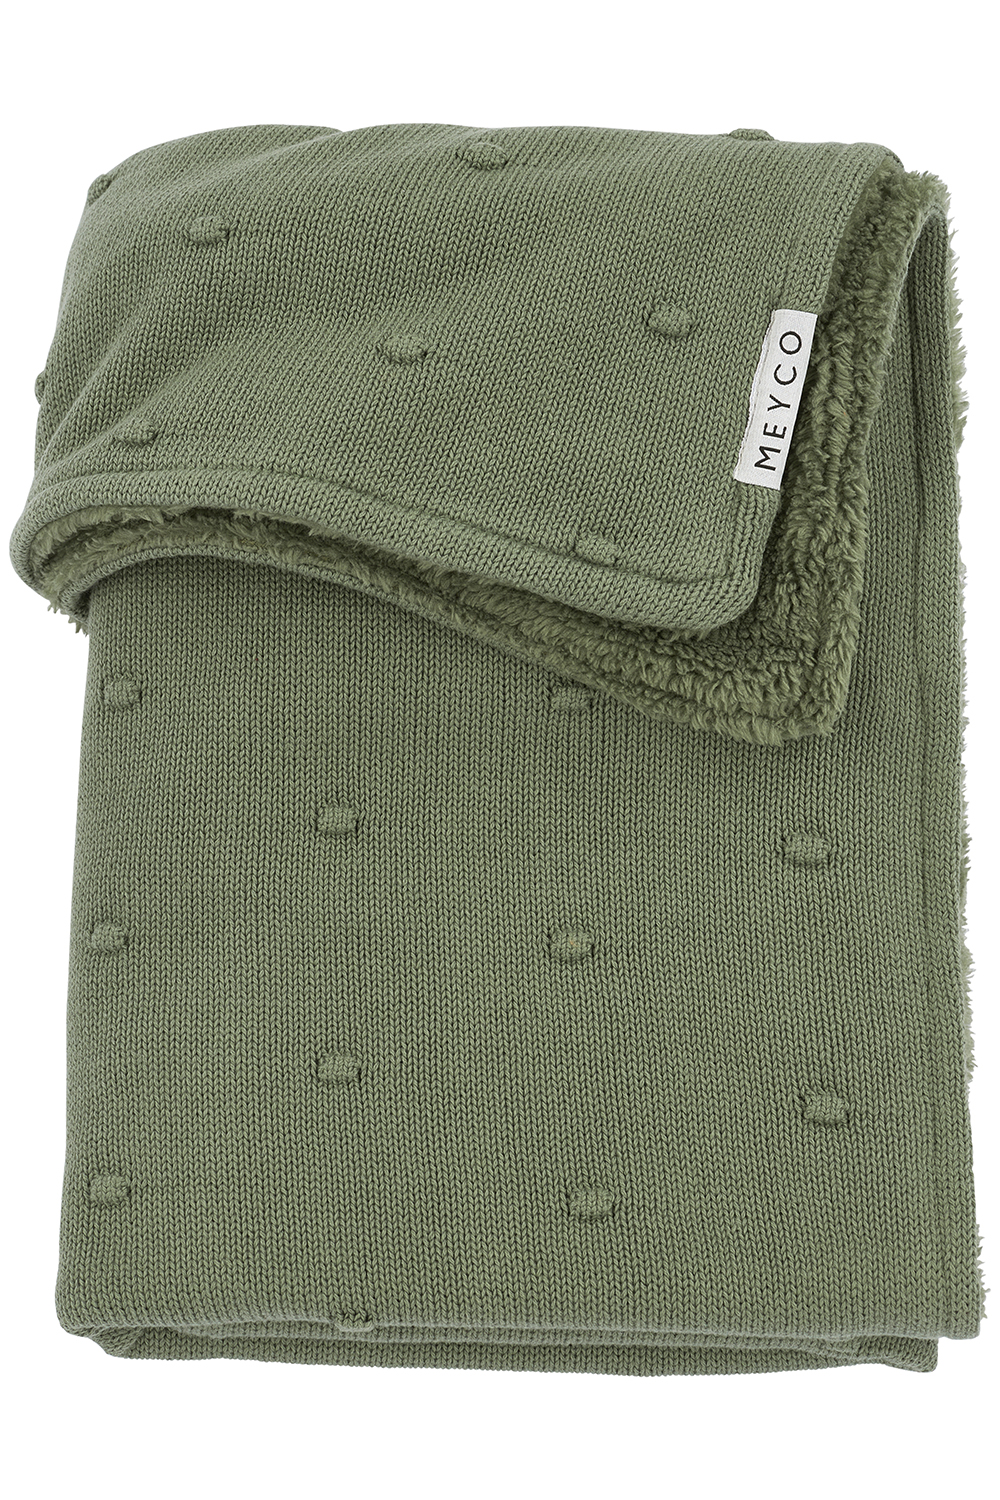 Crib Blanket Mini Knots Teddy - Forest Green - 75x100cm